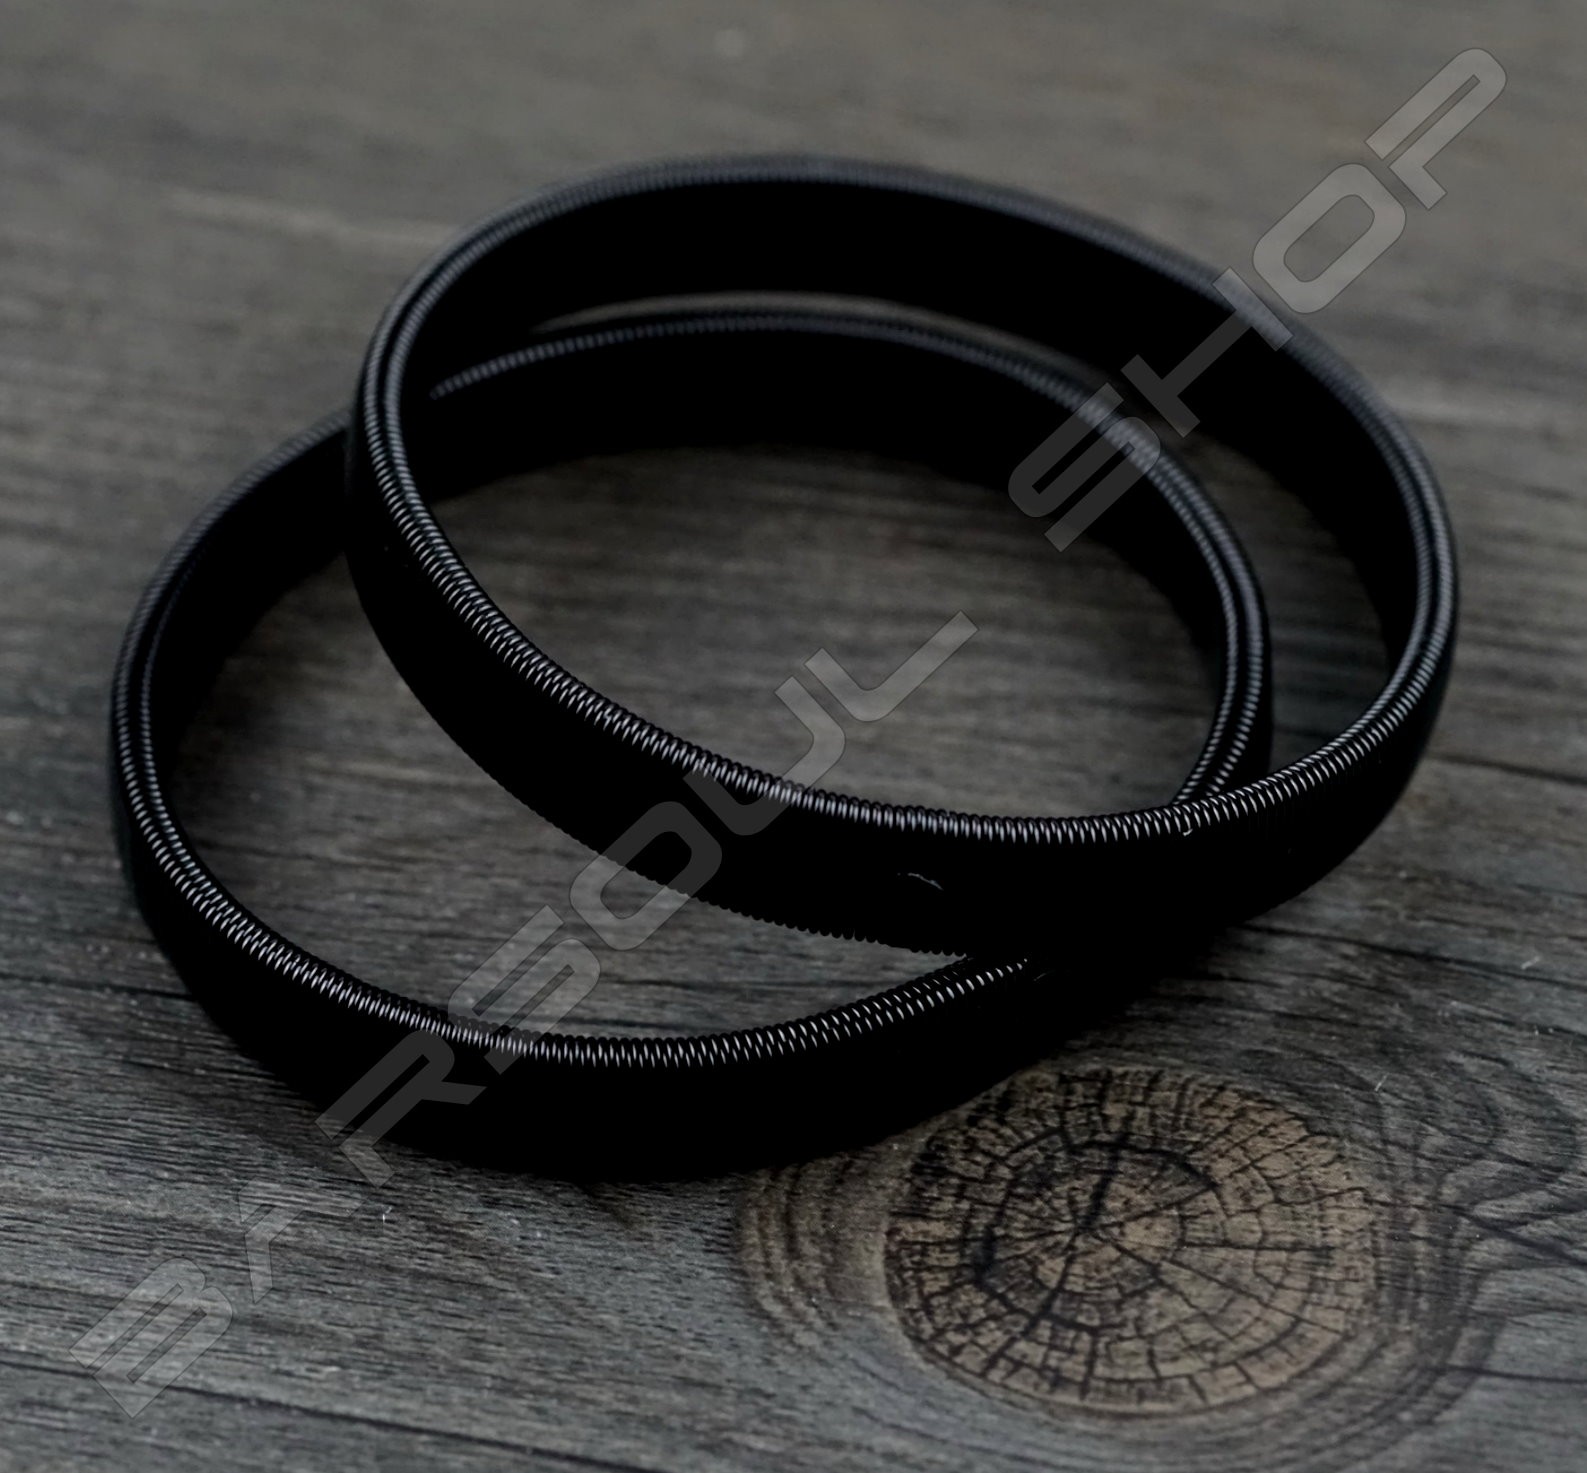 彈性金屬袖環組(黑色) Resilient metal sleeve garters(Black)